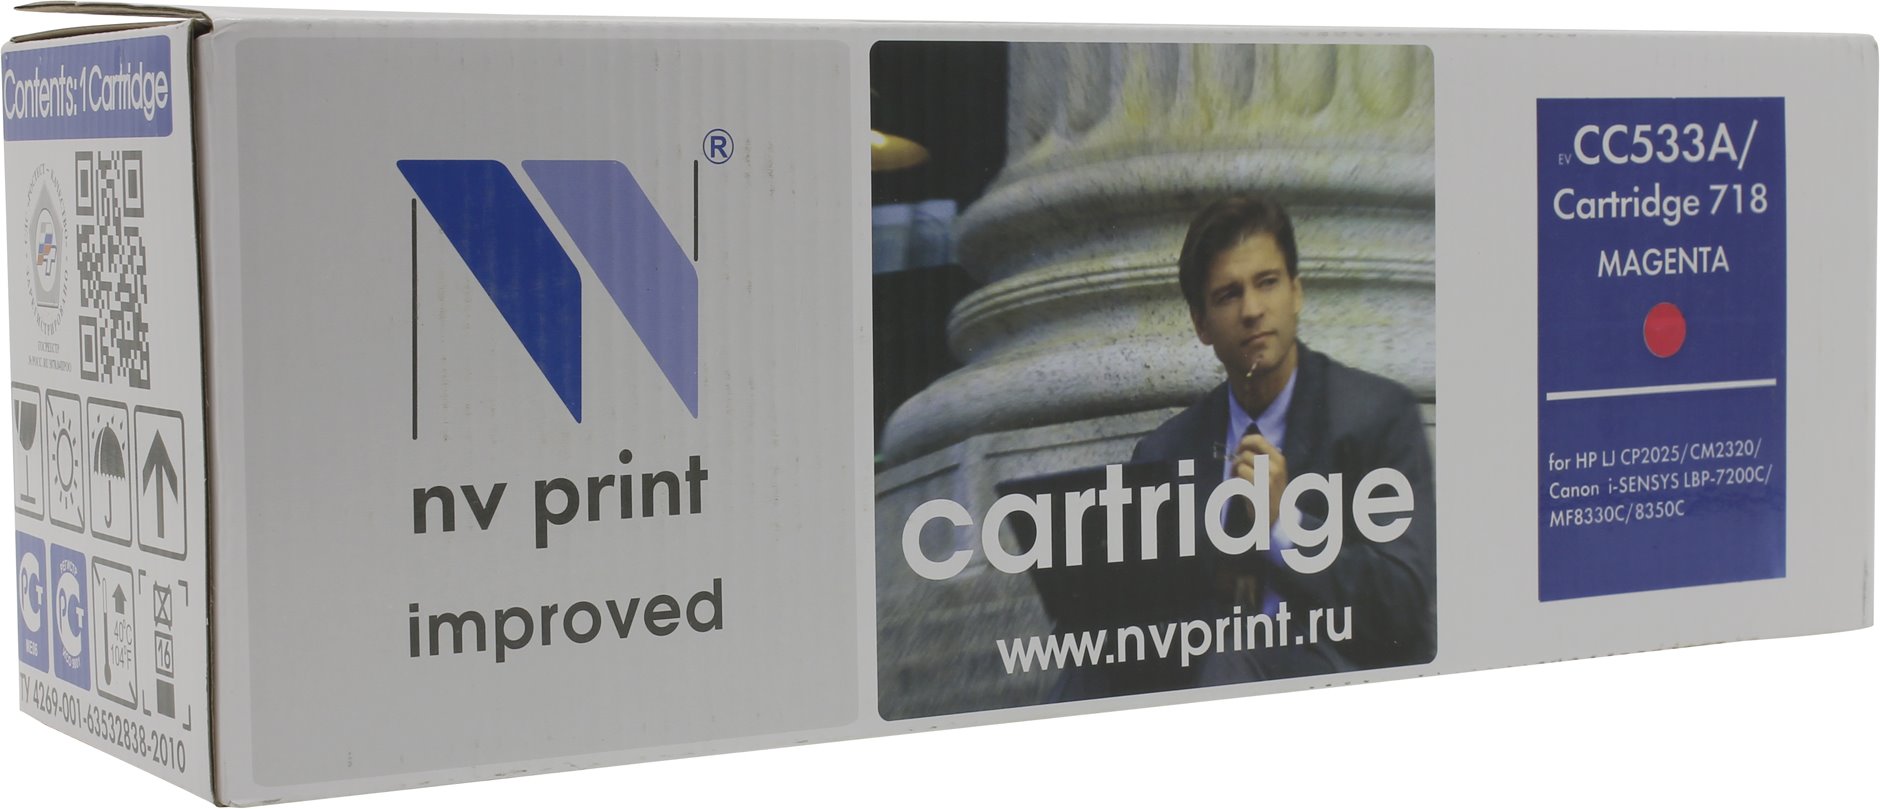   NV-Print  HP Color LaserJet CP2025/ CM2320 Magenta, CC533A